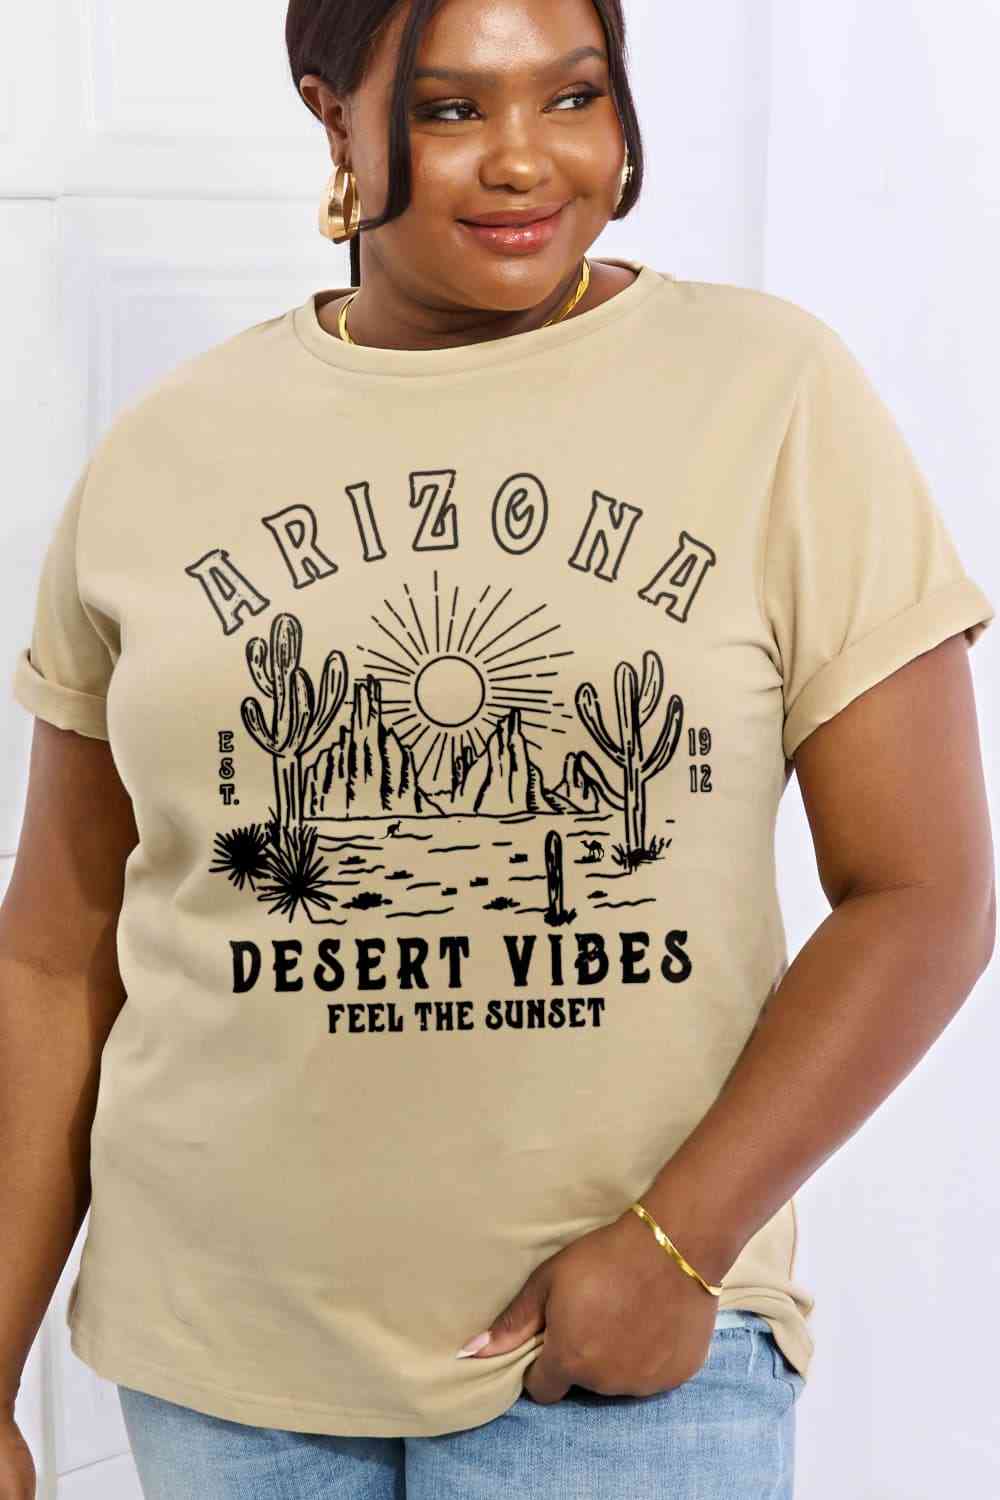 ARIZONA DESERT VIBES FEEL THE SUNSET Graphic Cotton Tee - Brown / S - T-Shirts - Shirts & Tops - 13 - 2024